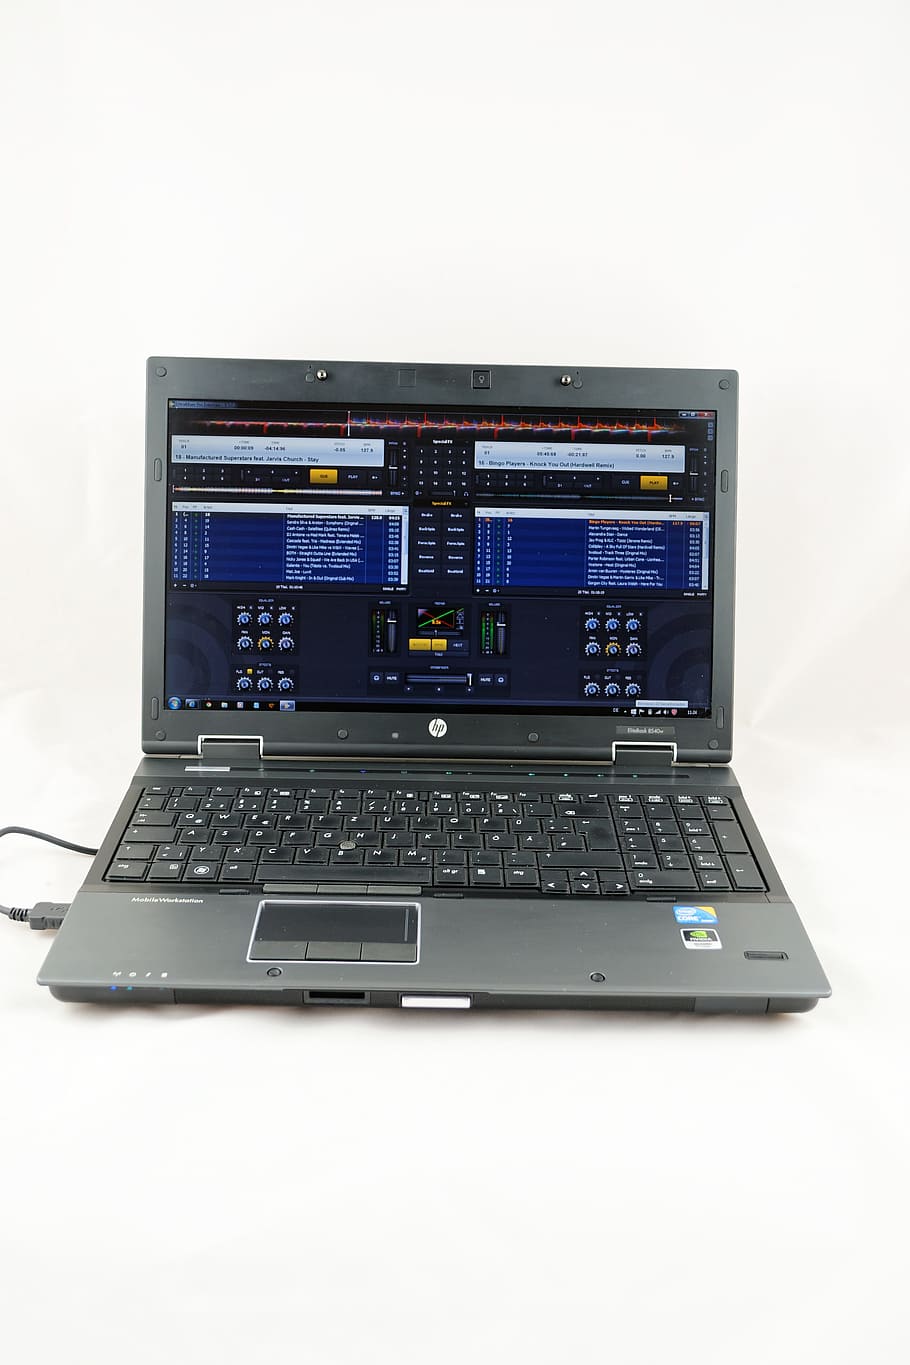 Mixer, Audio, Entertainment, Music, Mp3, dj, device, technical device, hp, hewlett packard